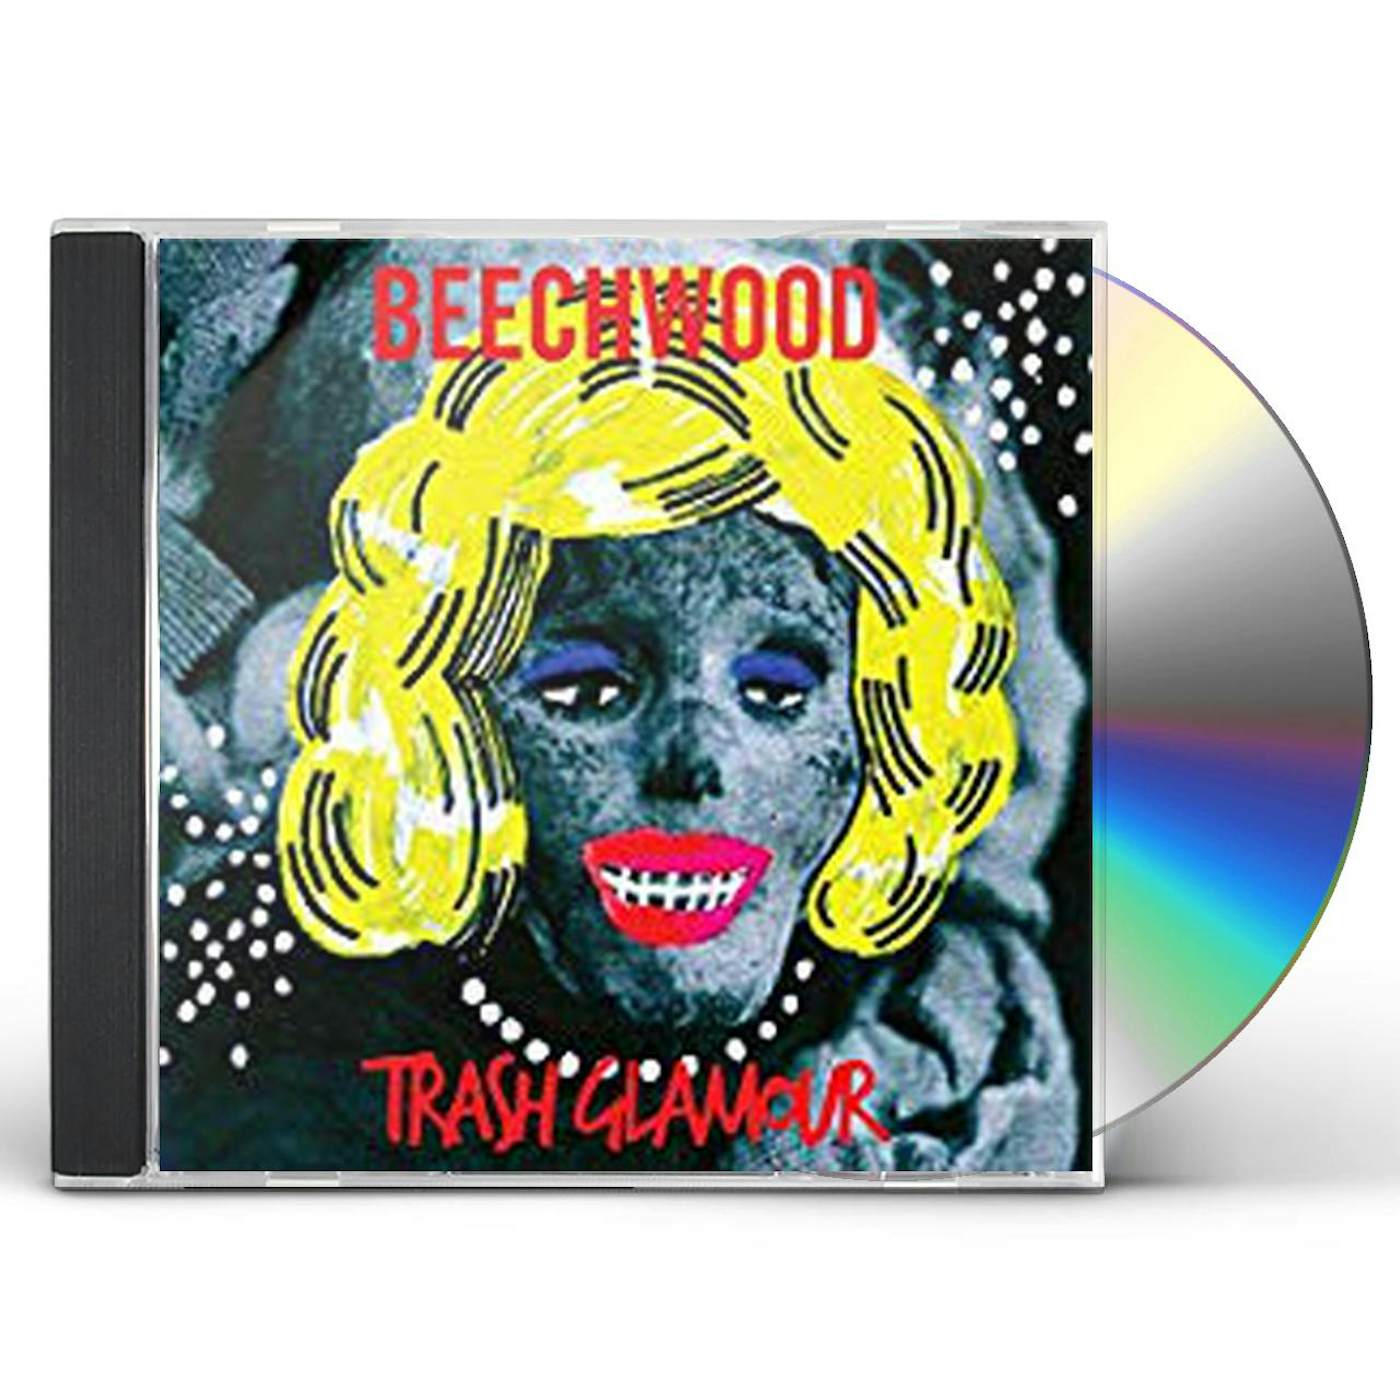 Beechwood TRASH GLAMOUR CD